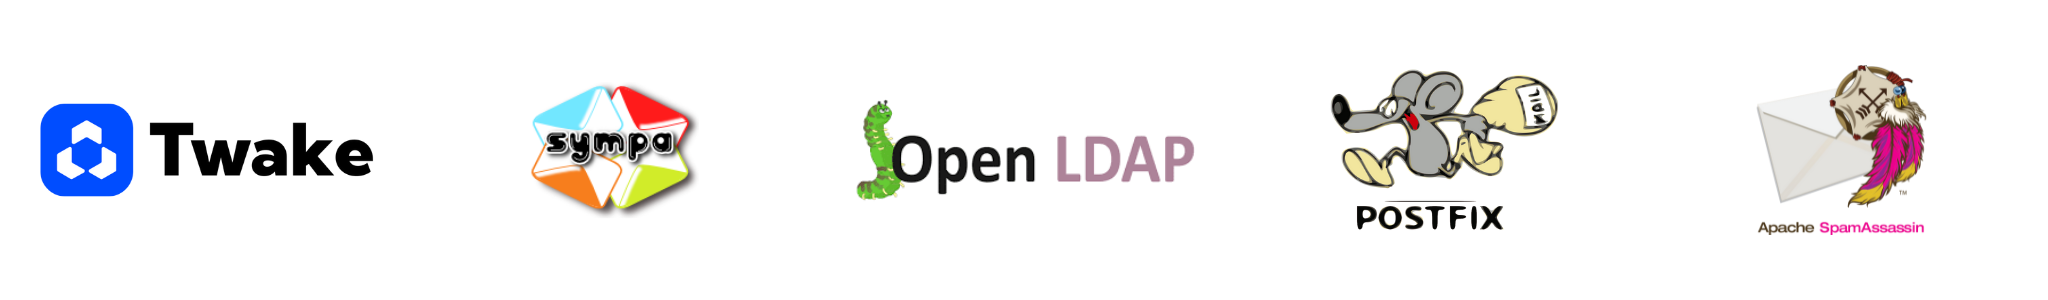 Twake Open LDAP